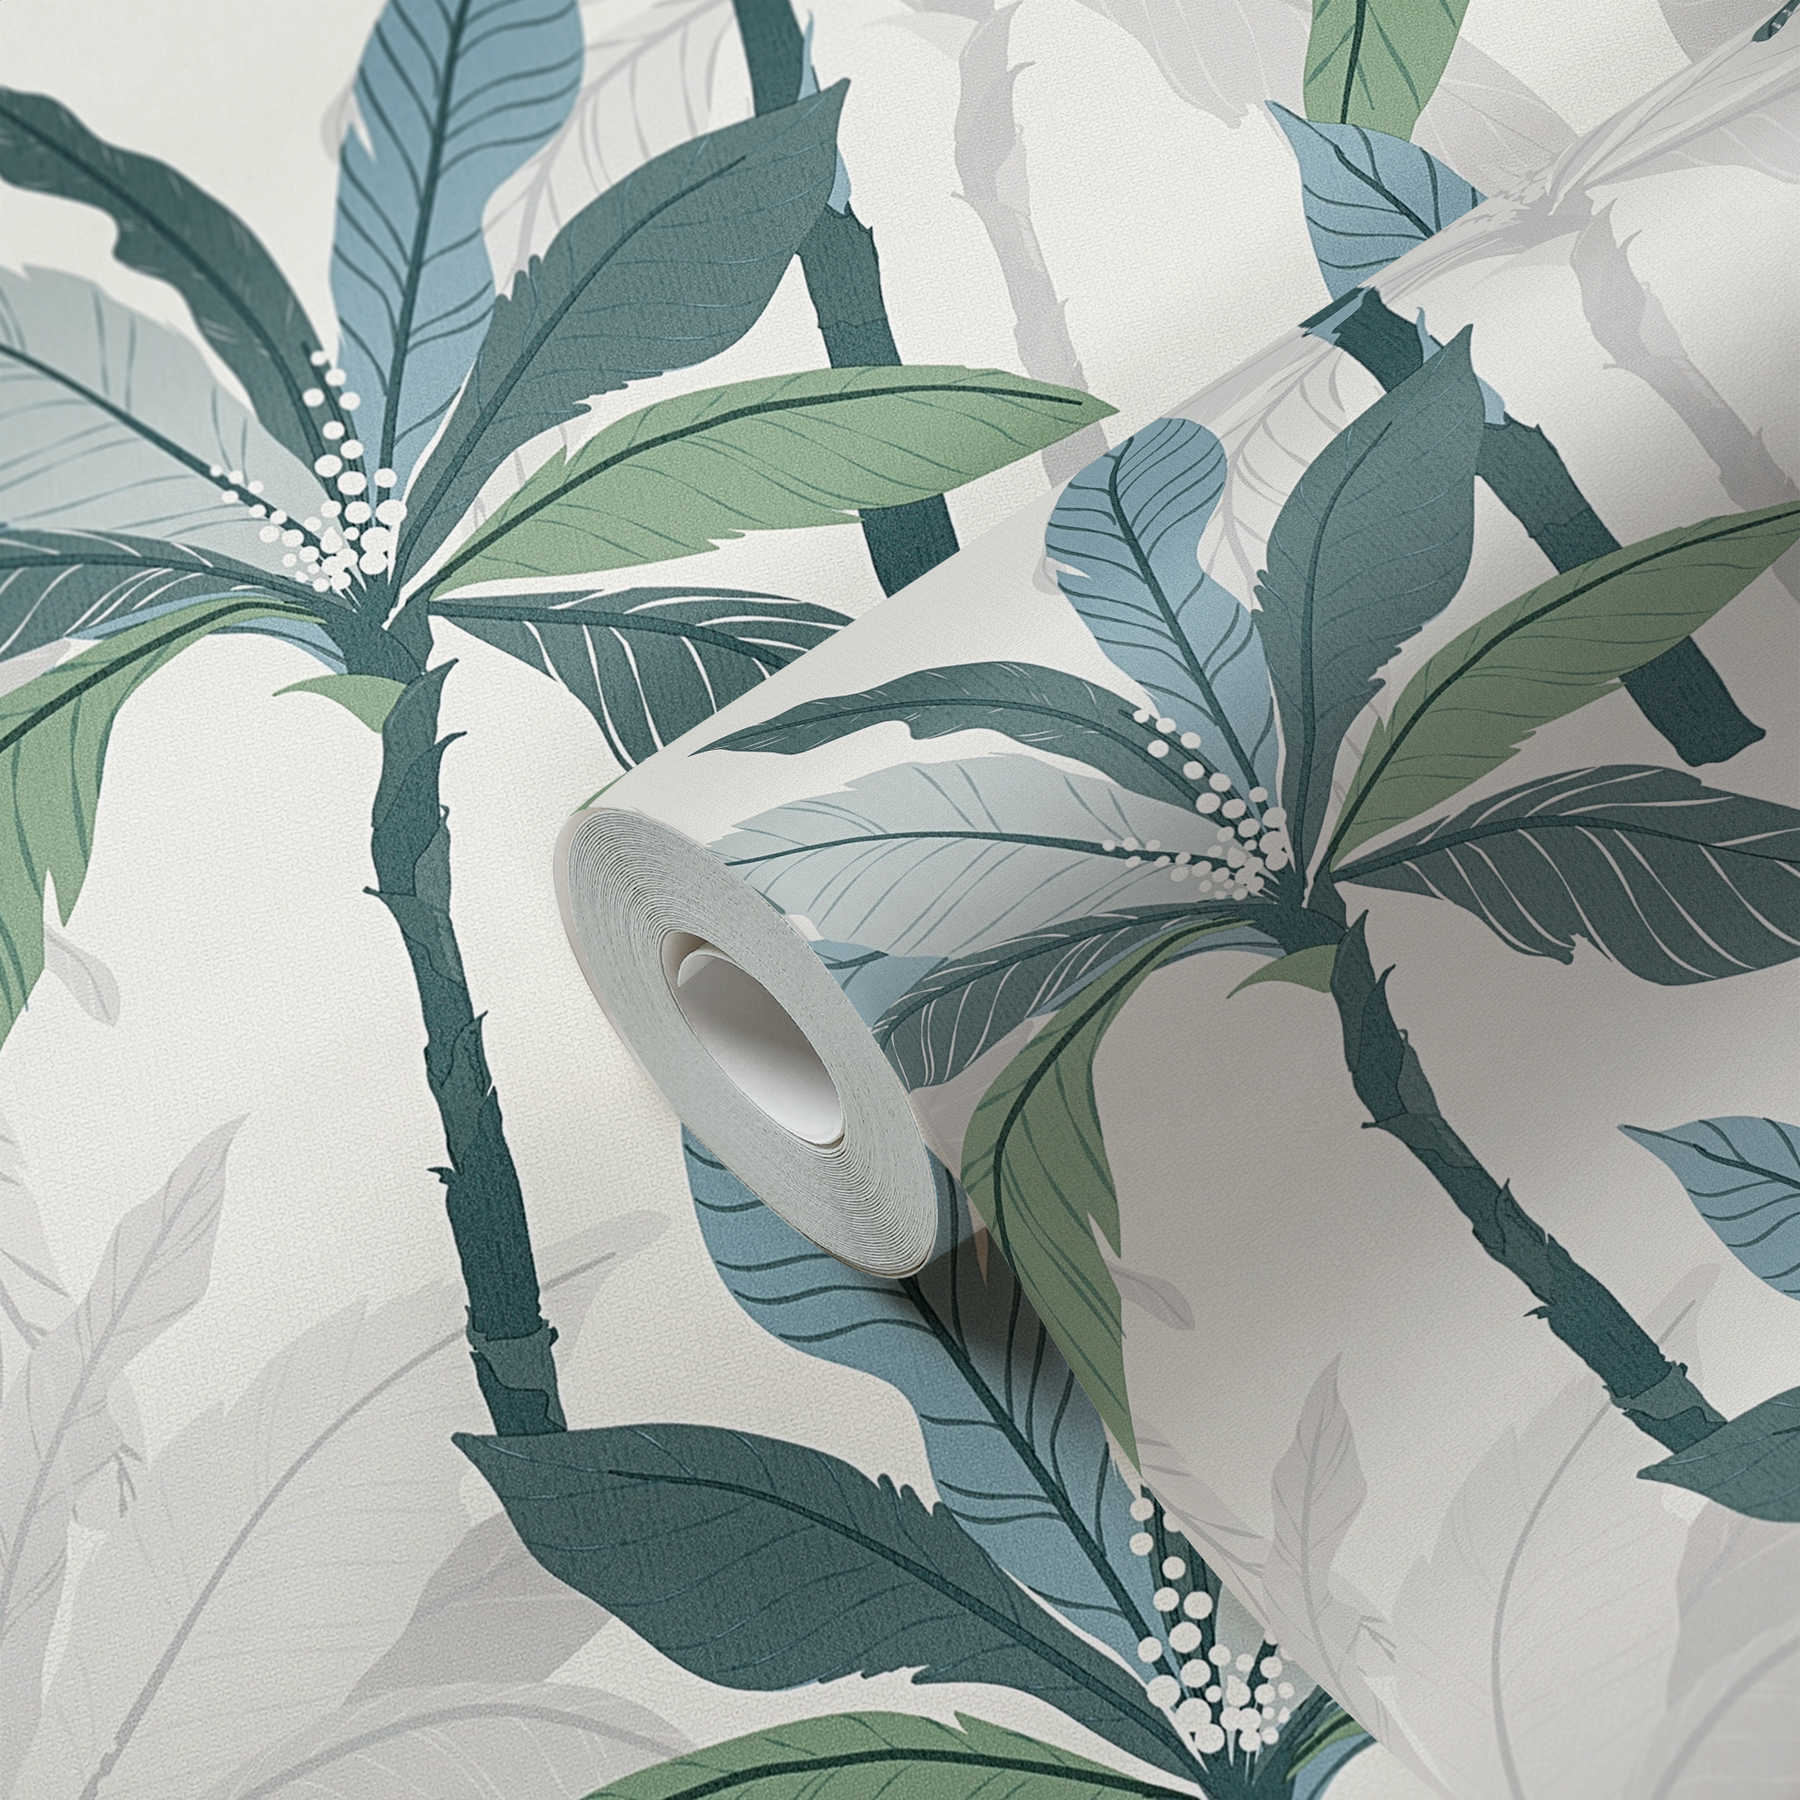             Papel pintado tropical con diseño de palmeras - azul, verde, blanco
        